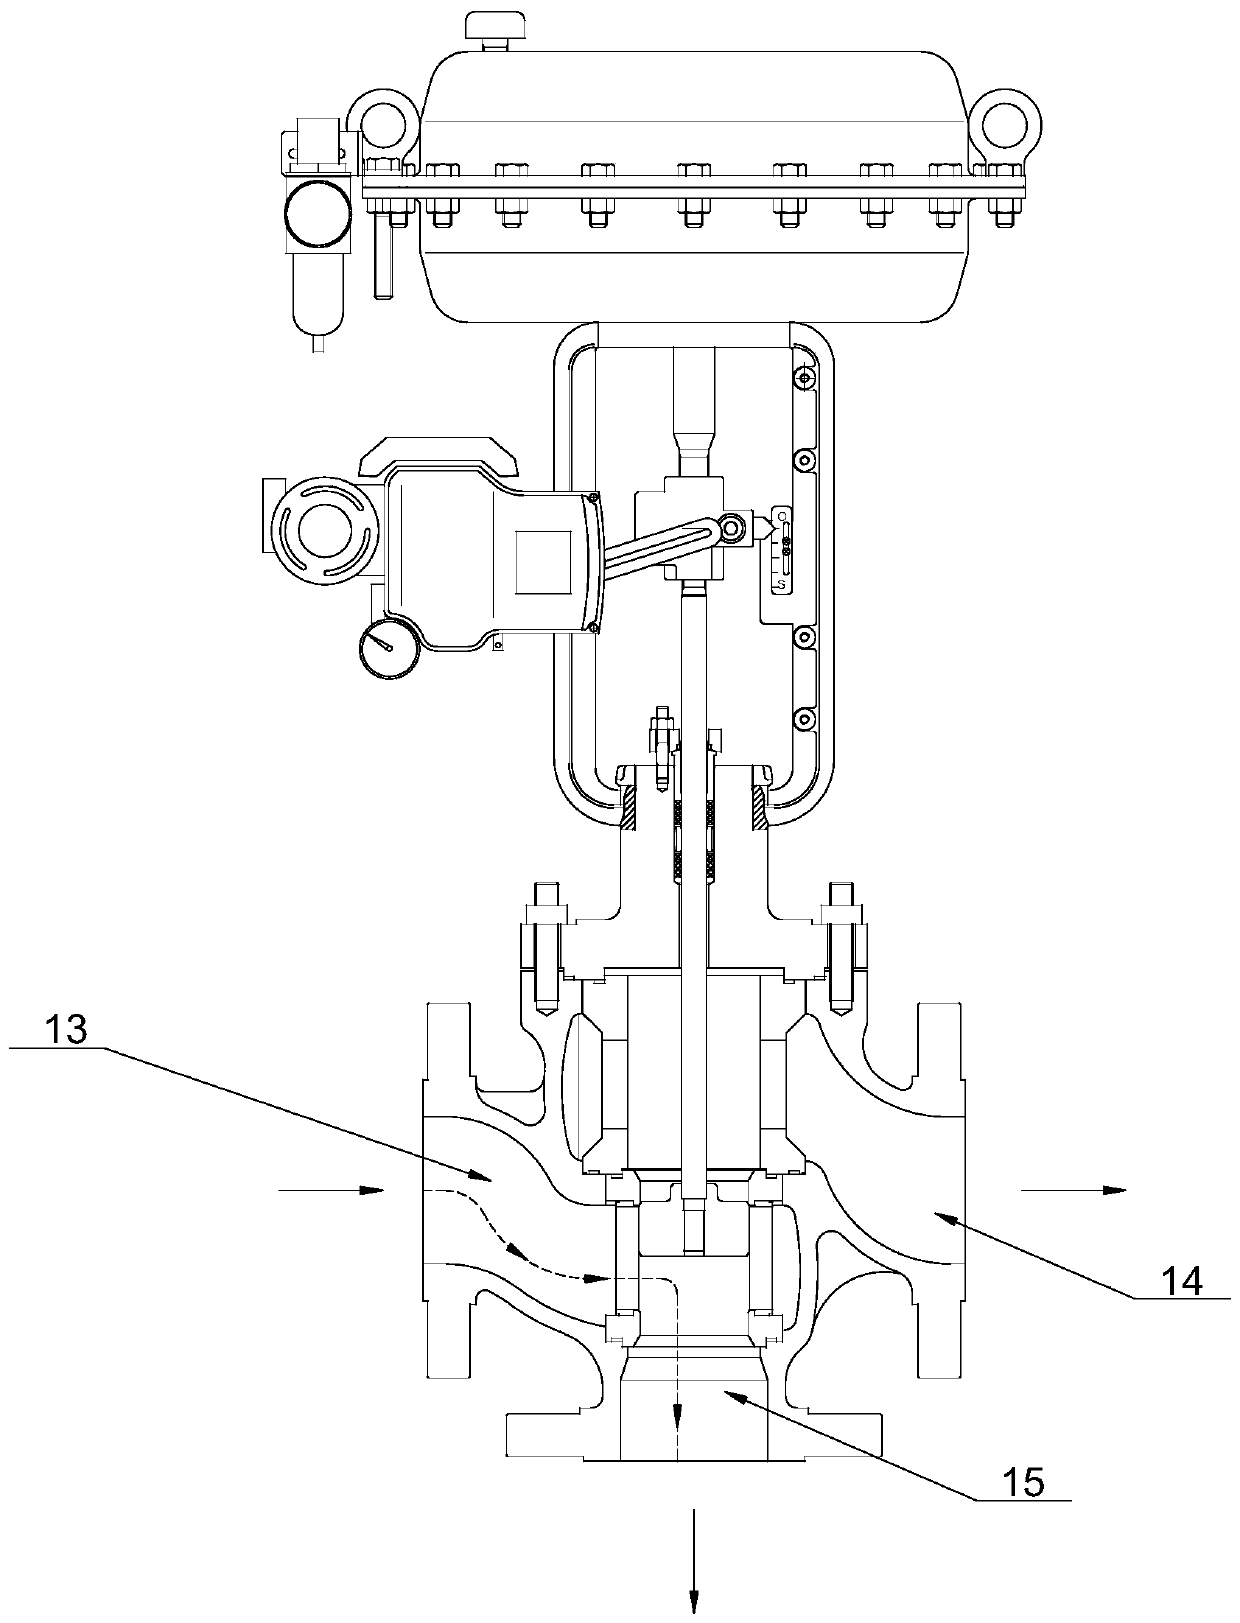 Three-way control valve structure